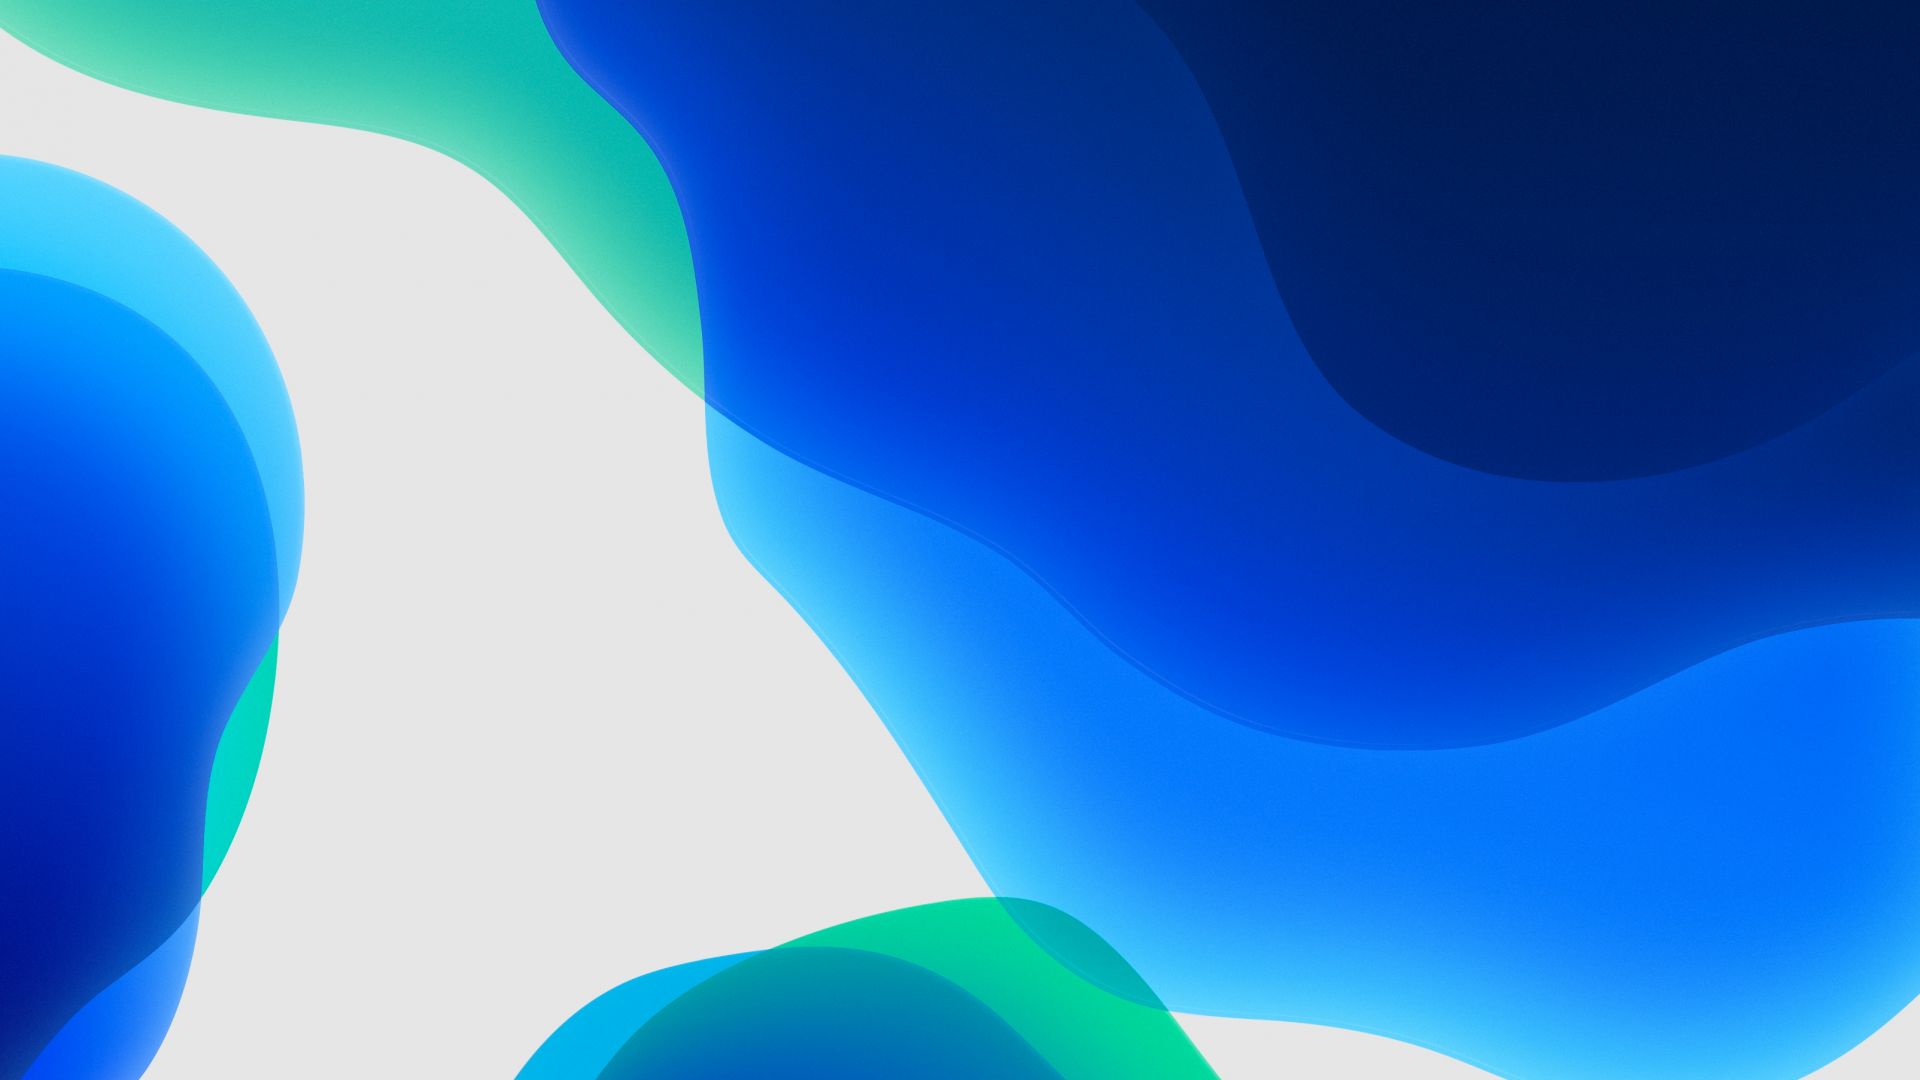 iOS 13, iPadOS, abstract, colorful, WWDC 2019, 4K (horizontal)